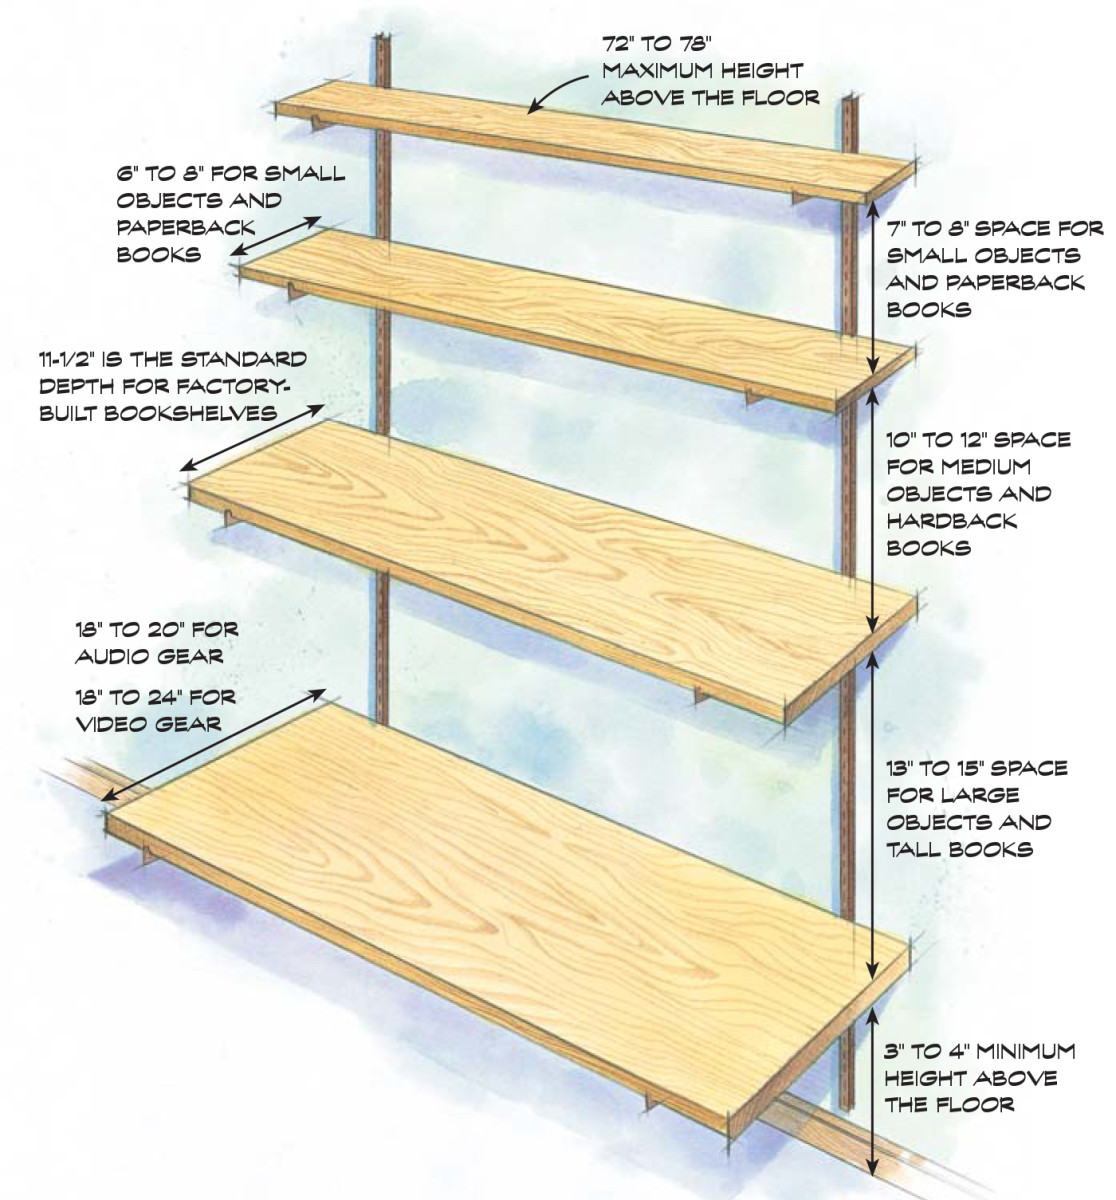 How do I make this shelf more sturdy? : r/woodworking